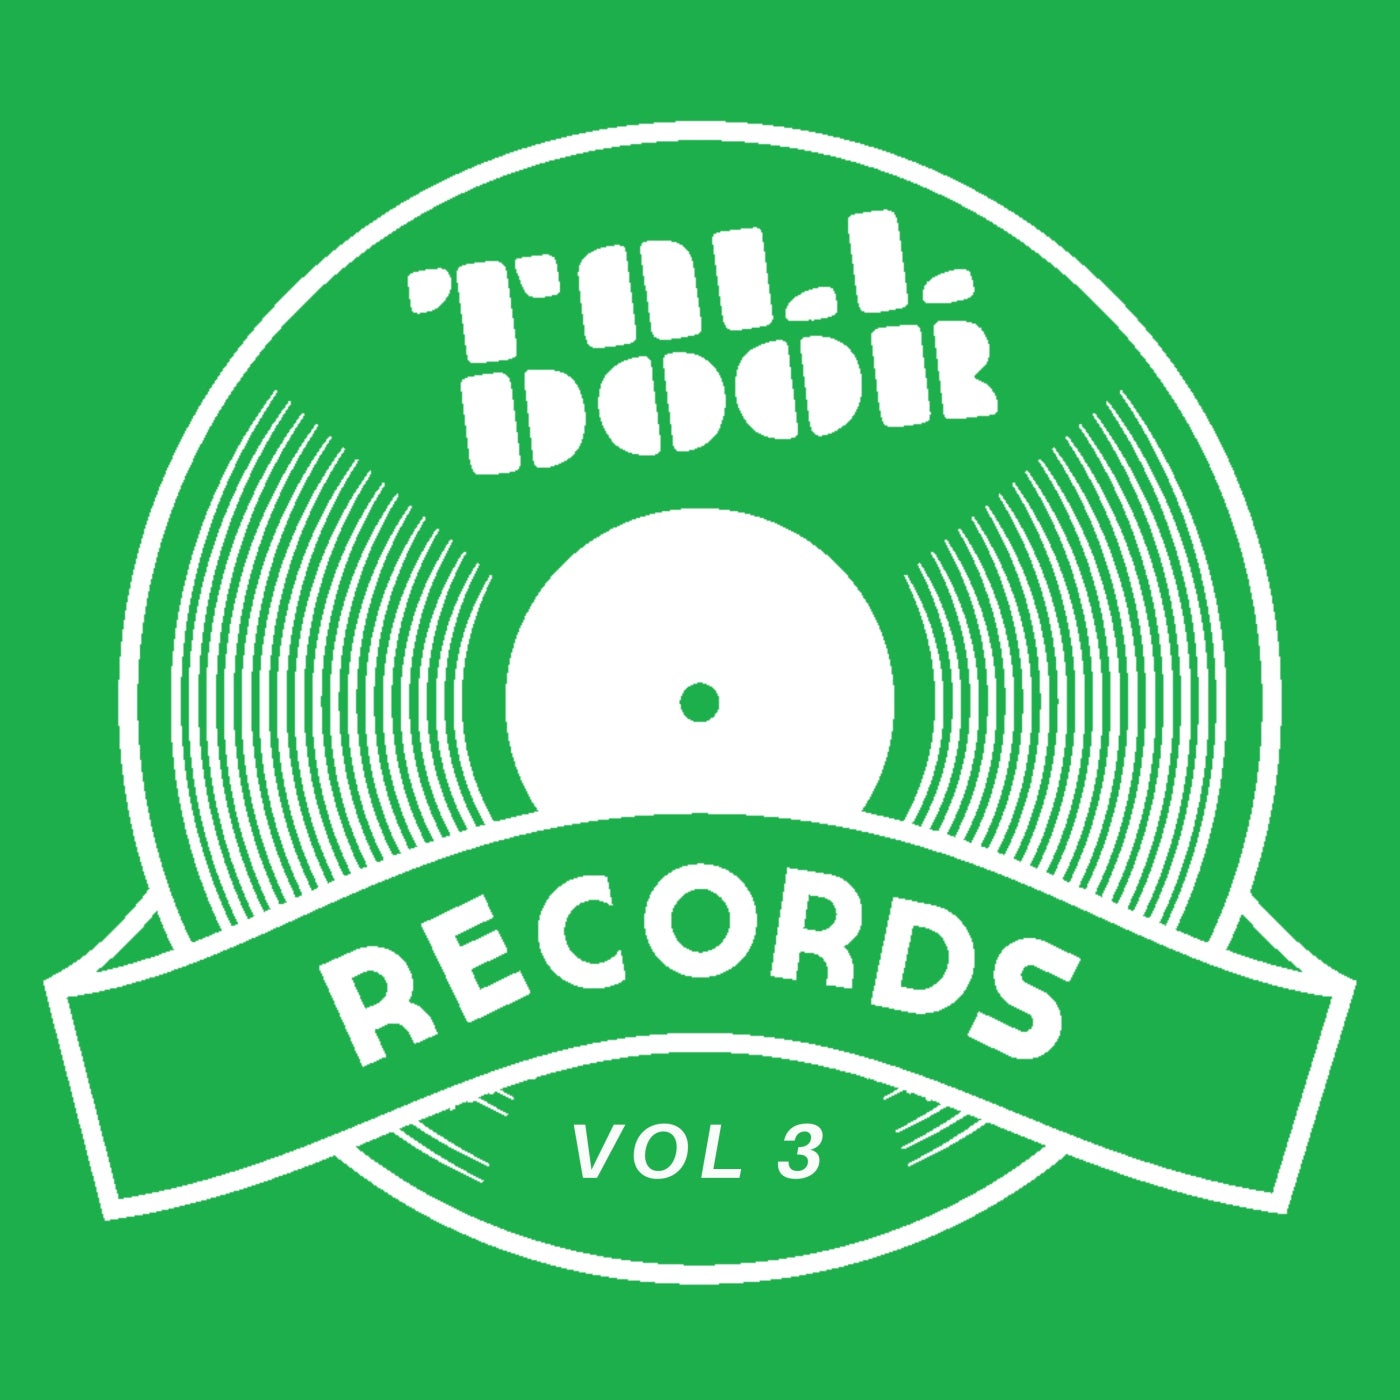 TALLDOOR RECORDS, Vol. 3